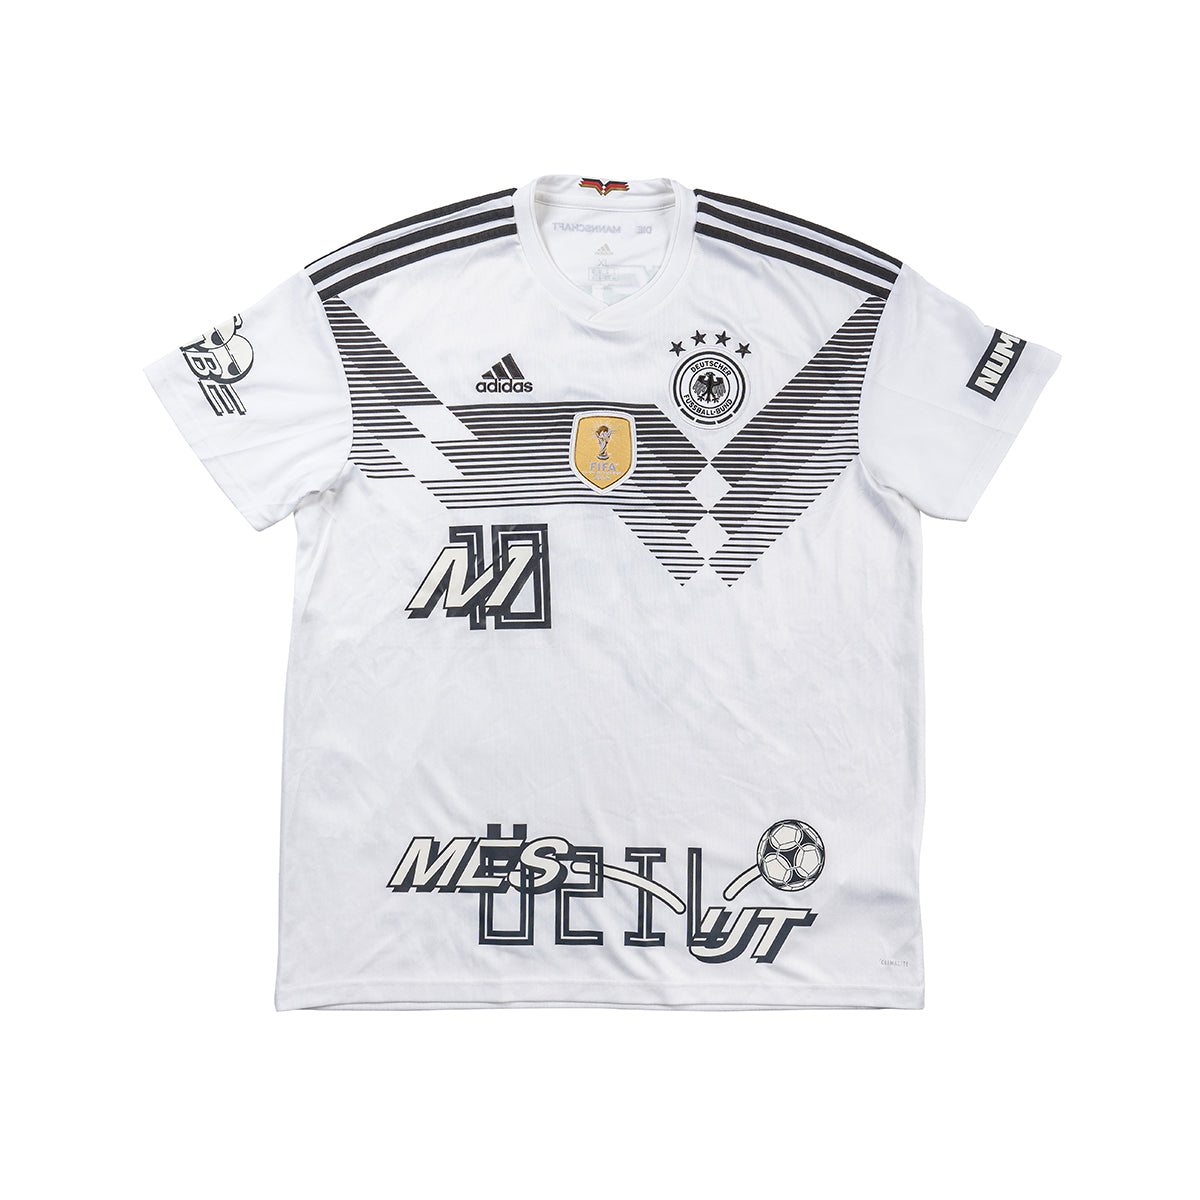 Women's White Brazil National Team Legend Performance T-shirt Nike Размер:  XL купить от 4470 рублей в интернет-магазине MALL